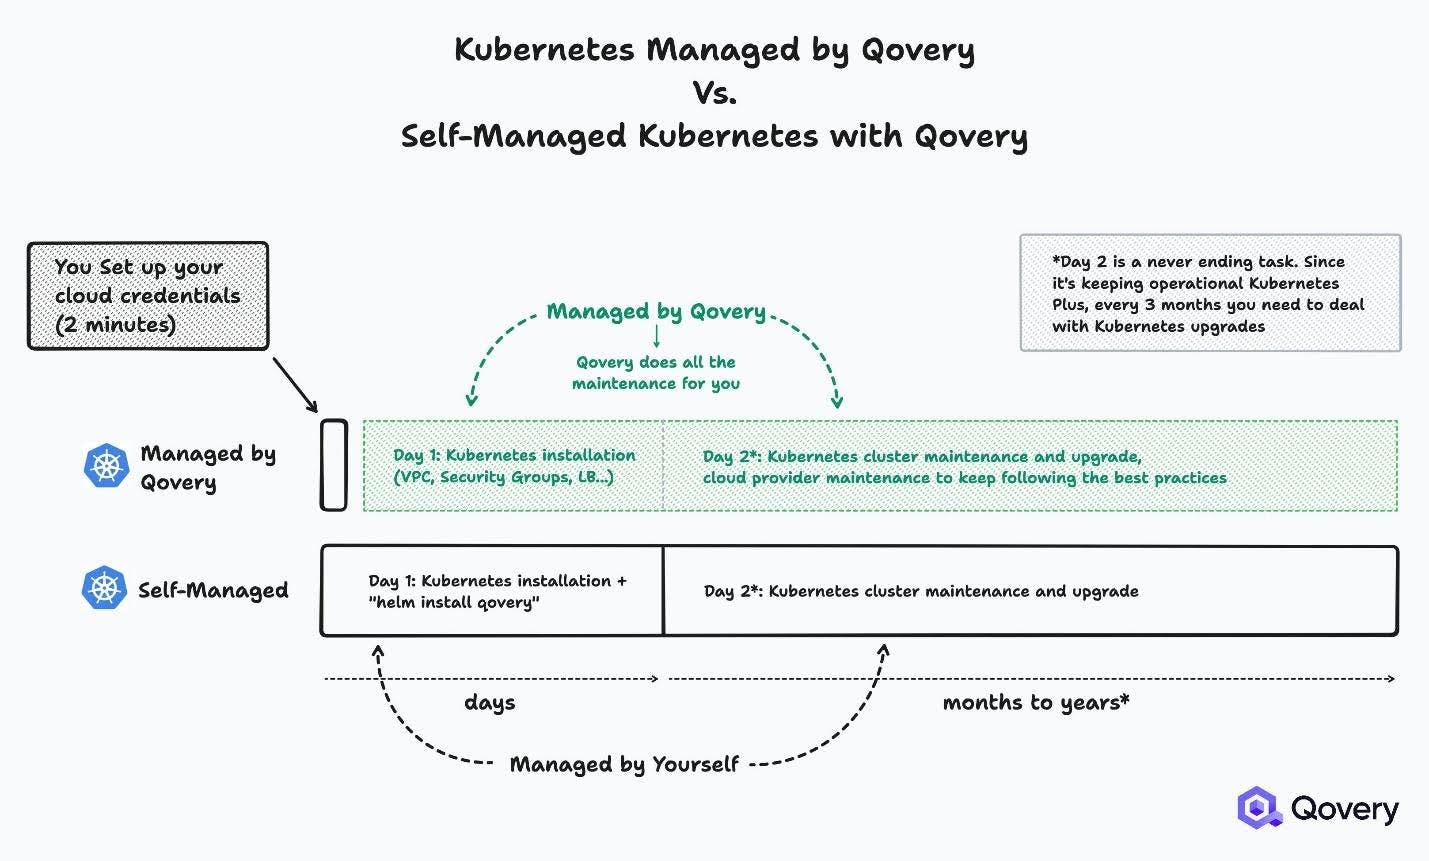 Source: https://www.qovery.com/blog/kubernetes-managed-by-qovery-vs-self-managed-byok/ 